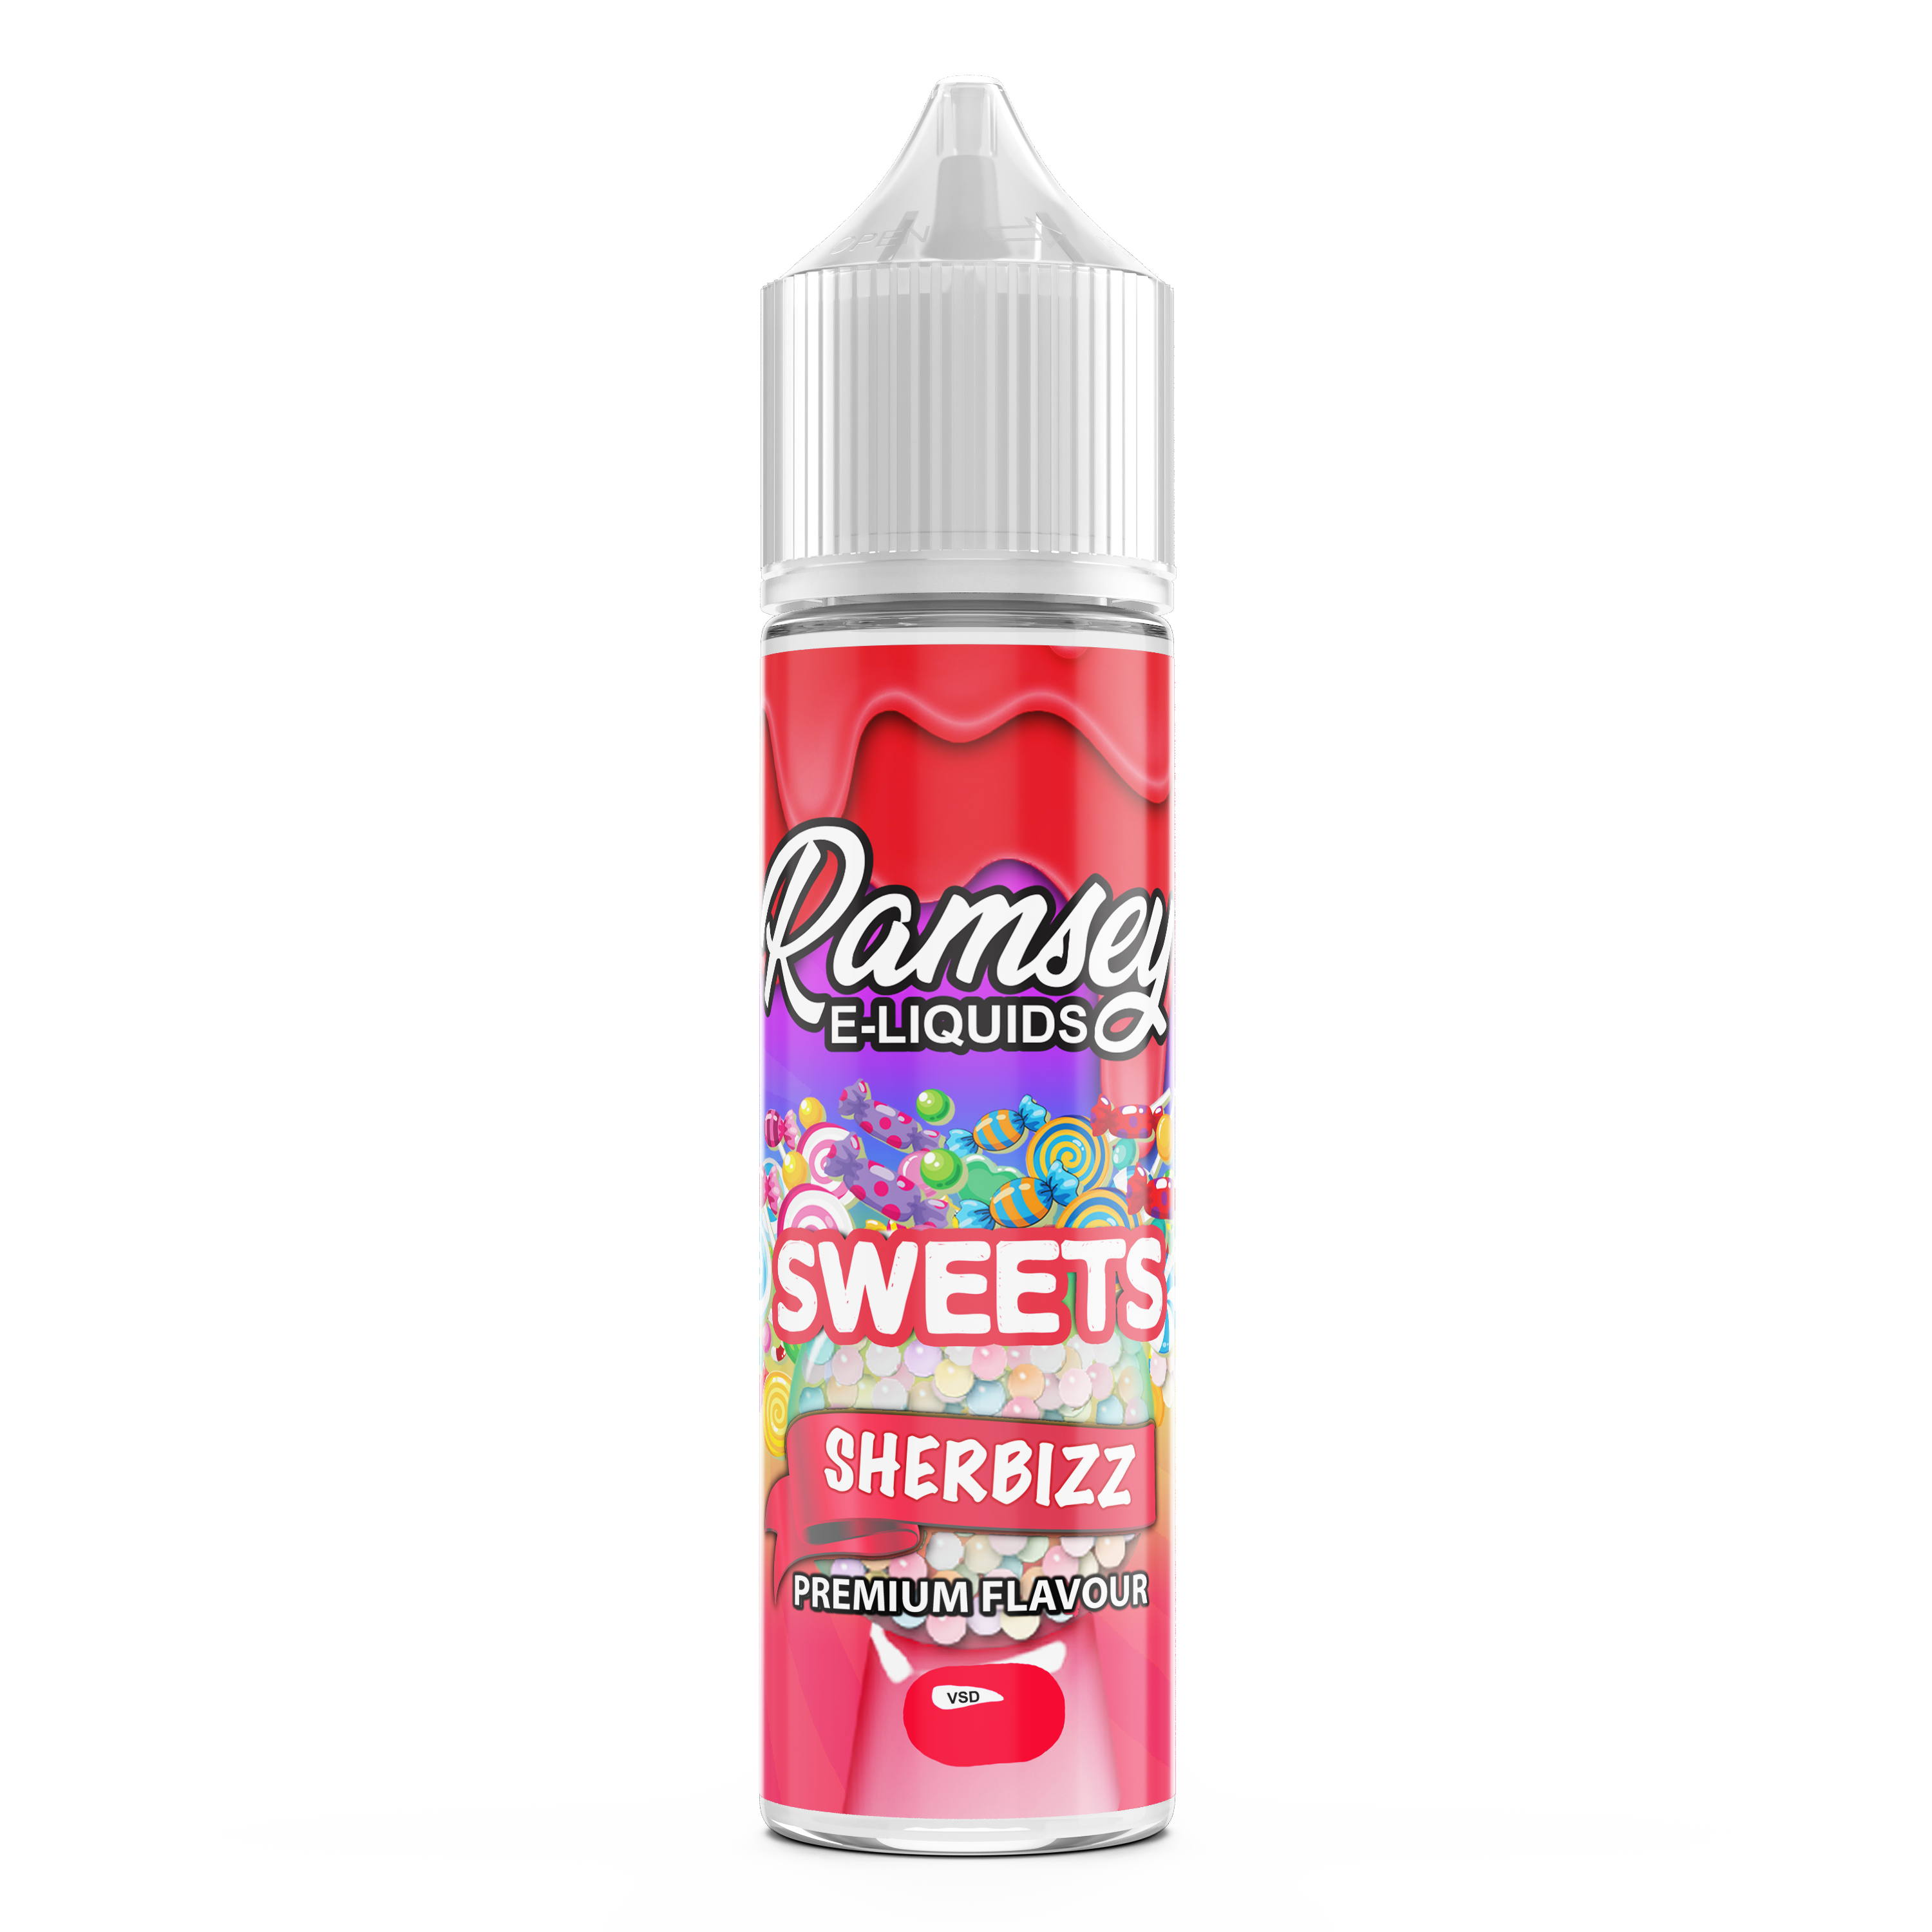 Ramsey E-Liquids Sweets: Sherbizz 0mg 50ml Shortfill E-Liquid